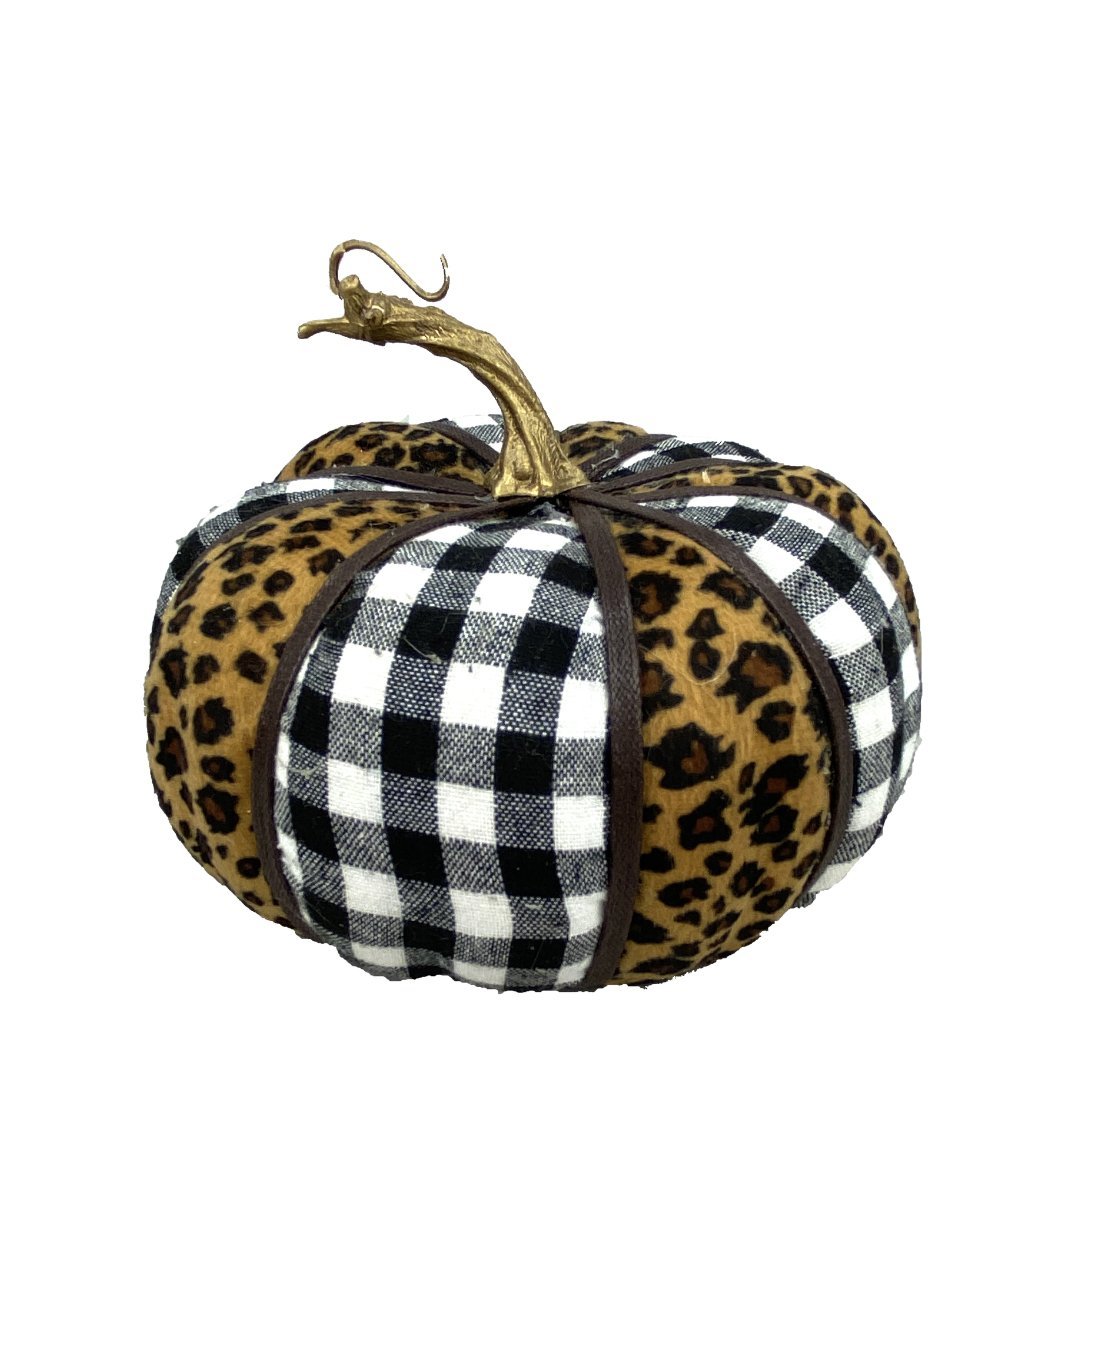 Plaid and cheetah fabric pumpkin - Greenery Market Picks